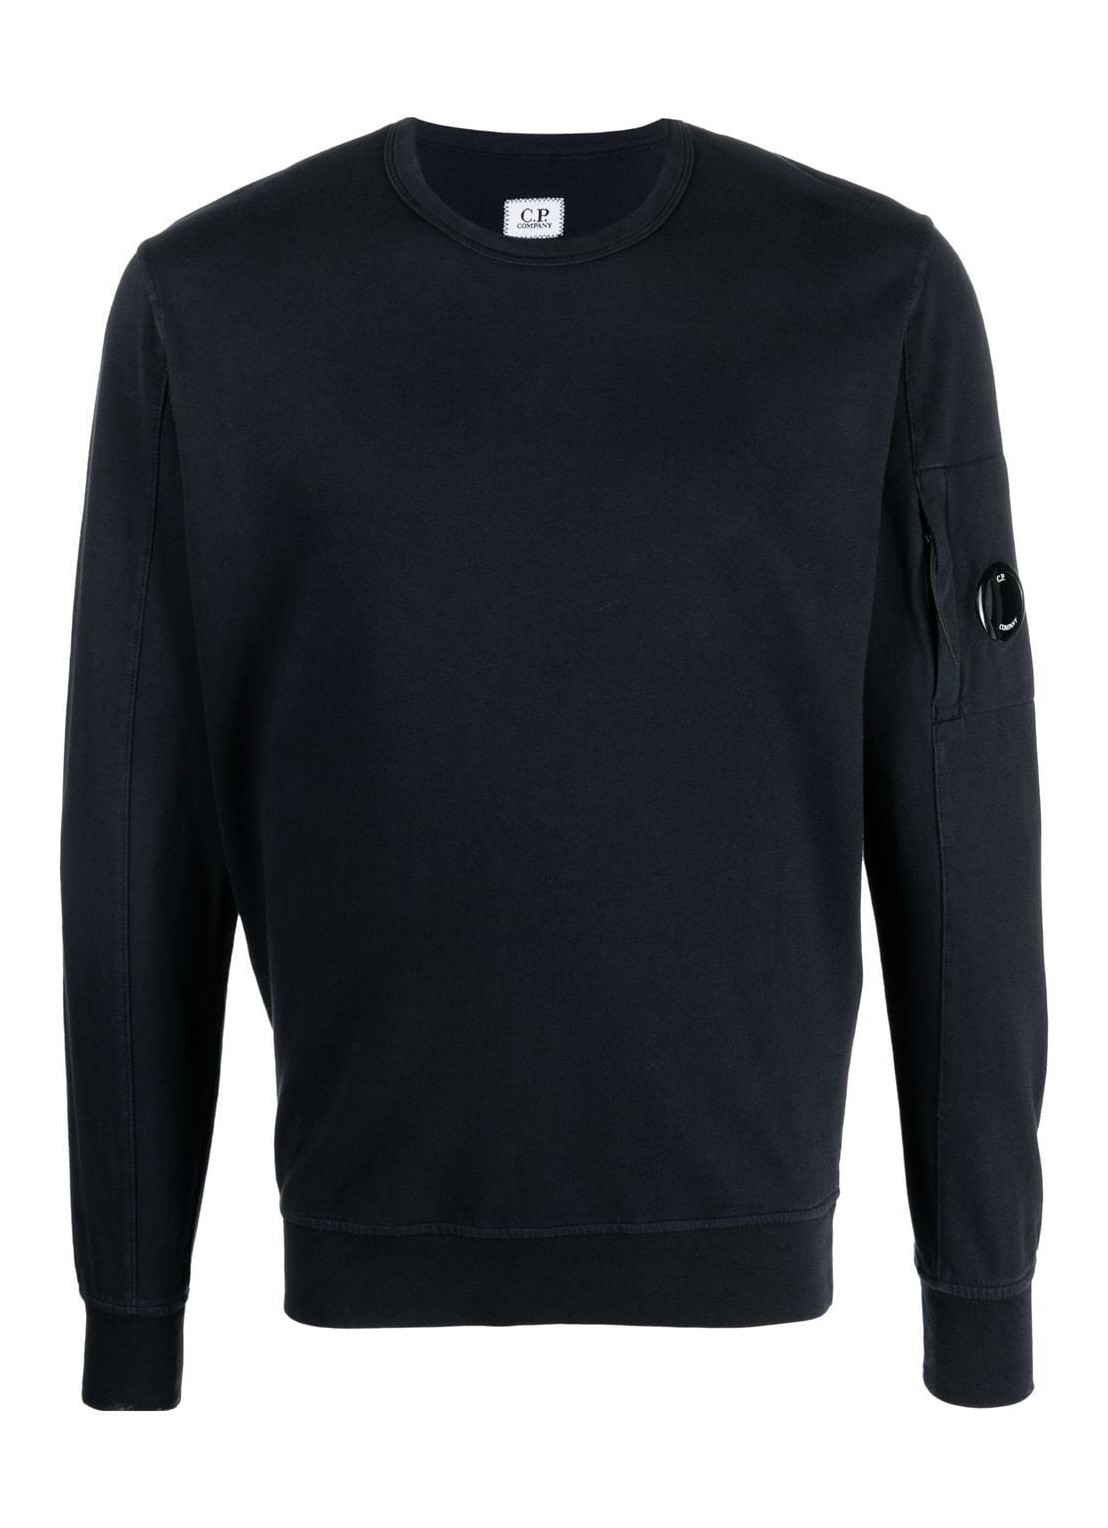 Sudadera c.p.company sweater man light fleece sweatshirt 14cmss032a002246g 868 talla XXL
 